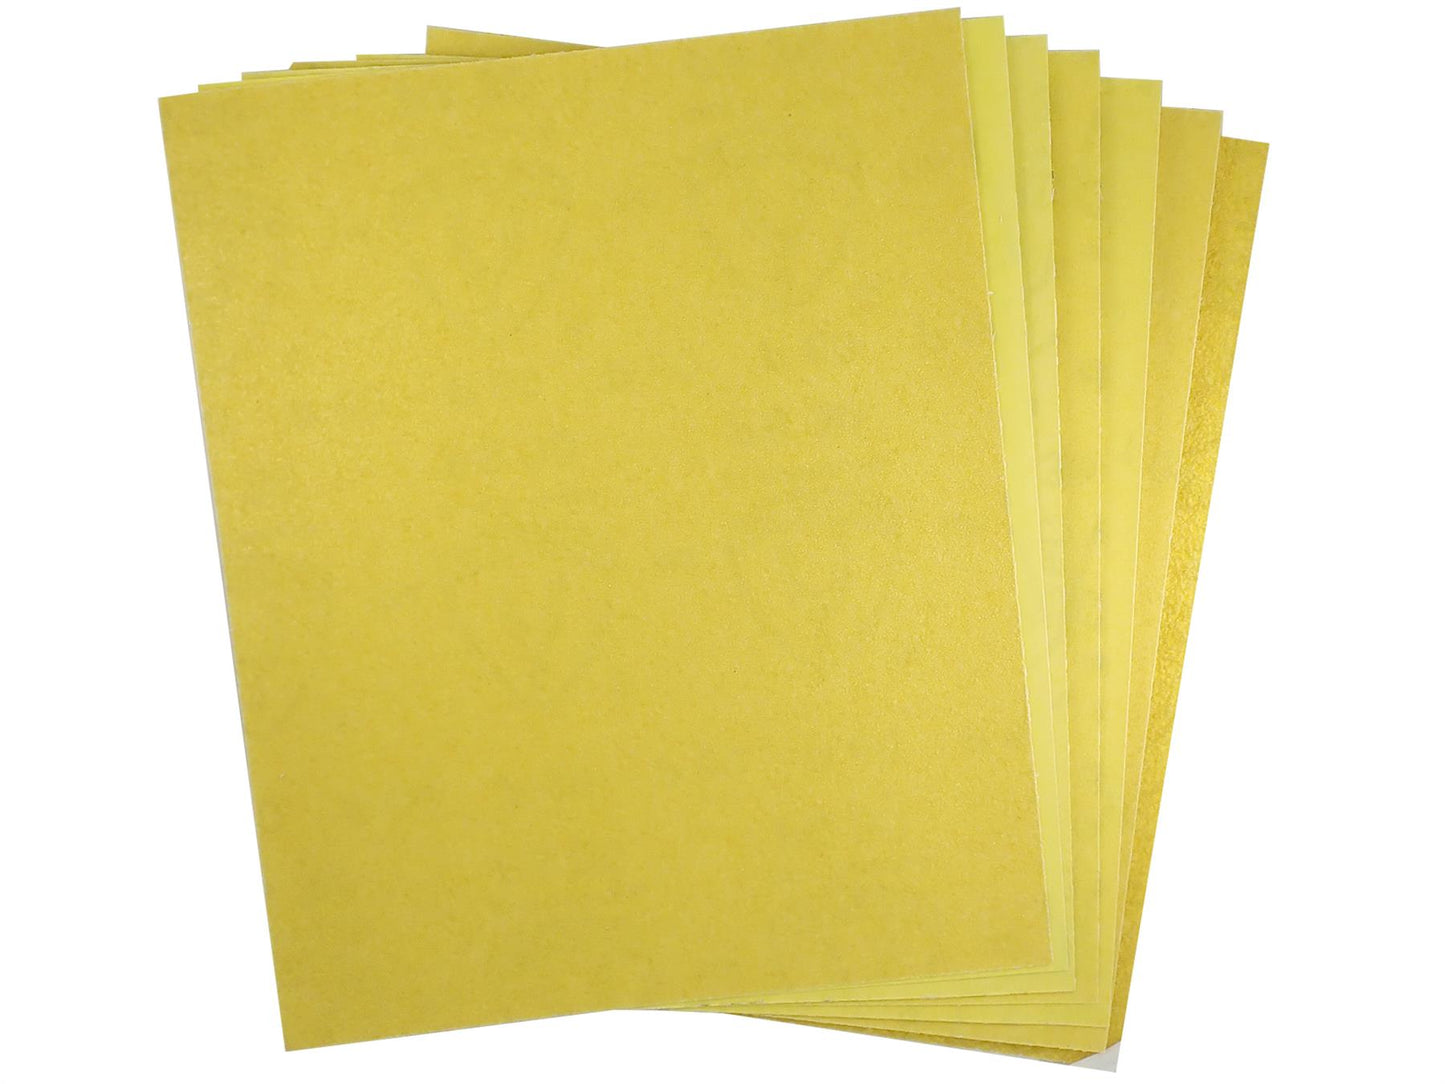 Klingspor PS30 Sandpaper Sheet Selection - 280x230mm (11x9.06"), Set of 7, 40-320